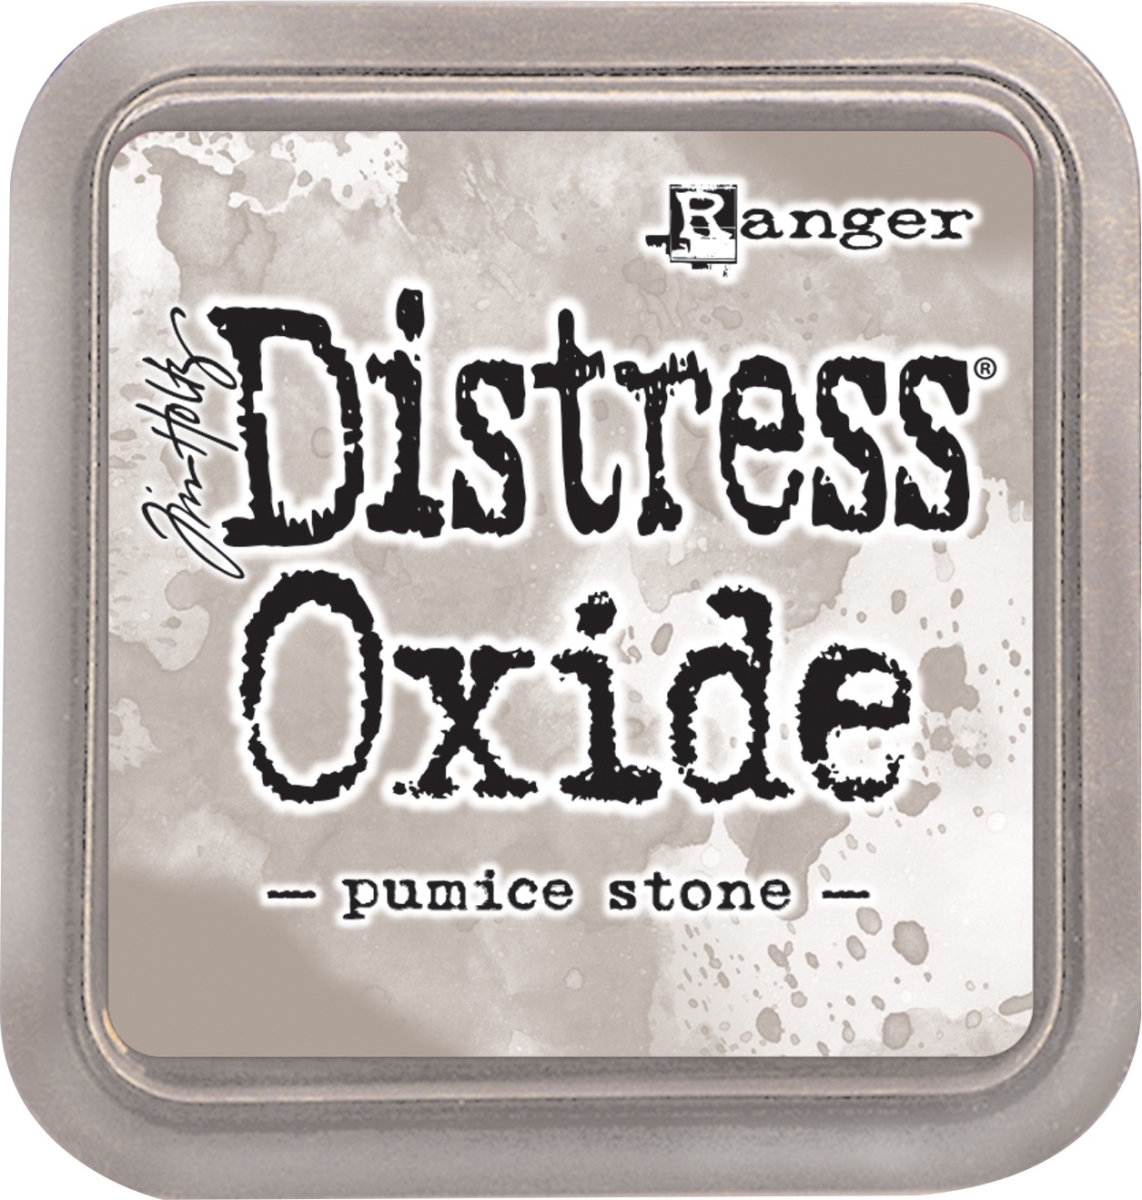 Tdo-56140 Tim Holtz Distress Oxides Ink Pad, Pumice Stone